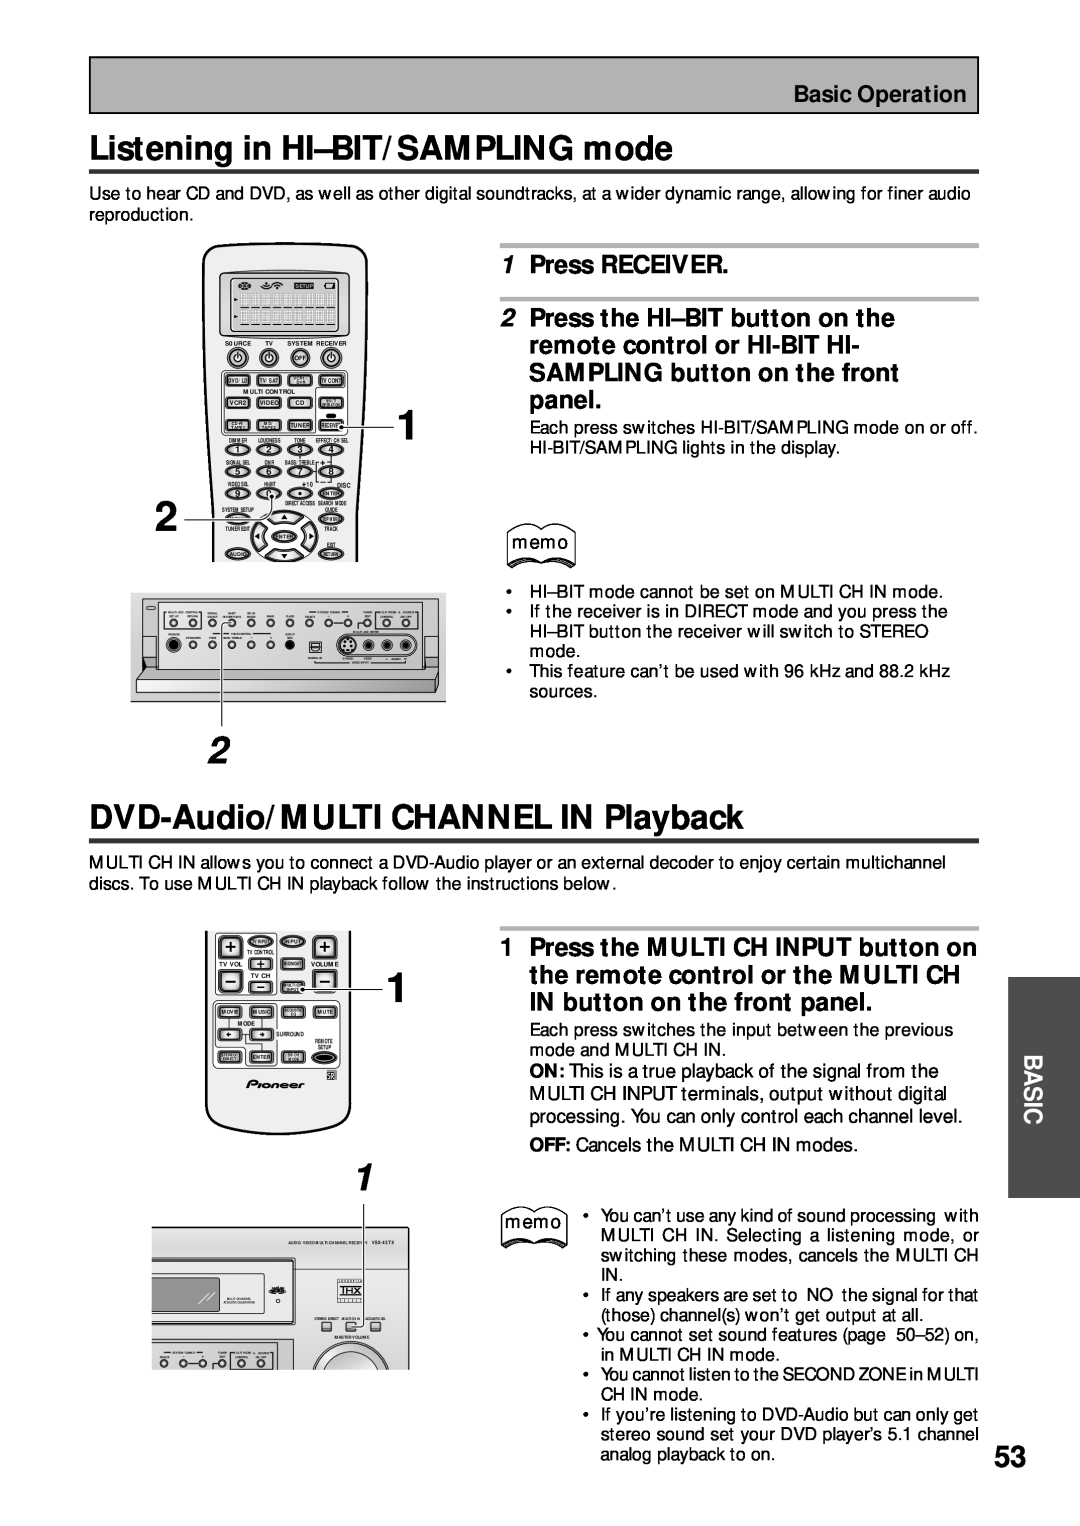 Pioneer VSX-45TX Listening in HI–BIT/SAMPLINGmode, DVD-Audio/MULTICHANNEL IN Playback, IN button on the front panel 